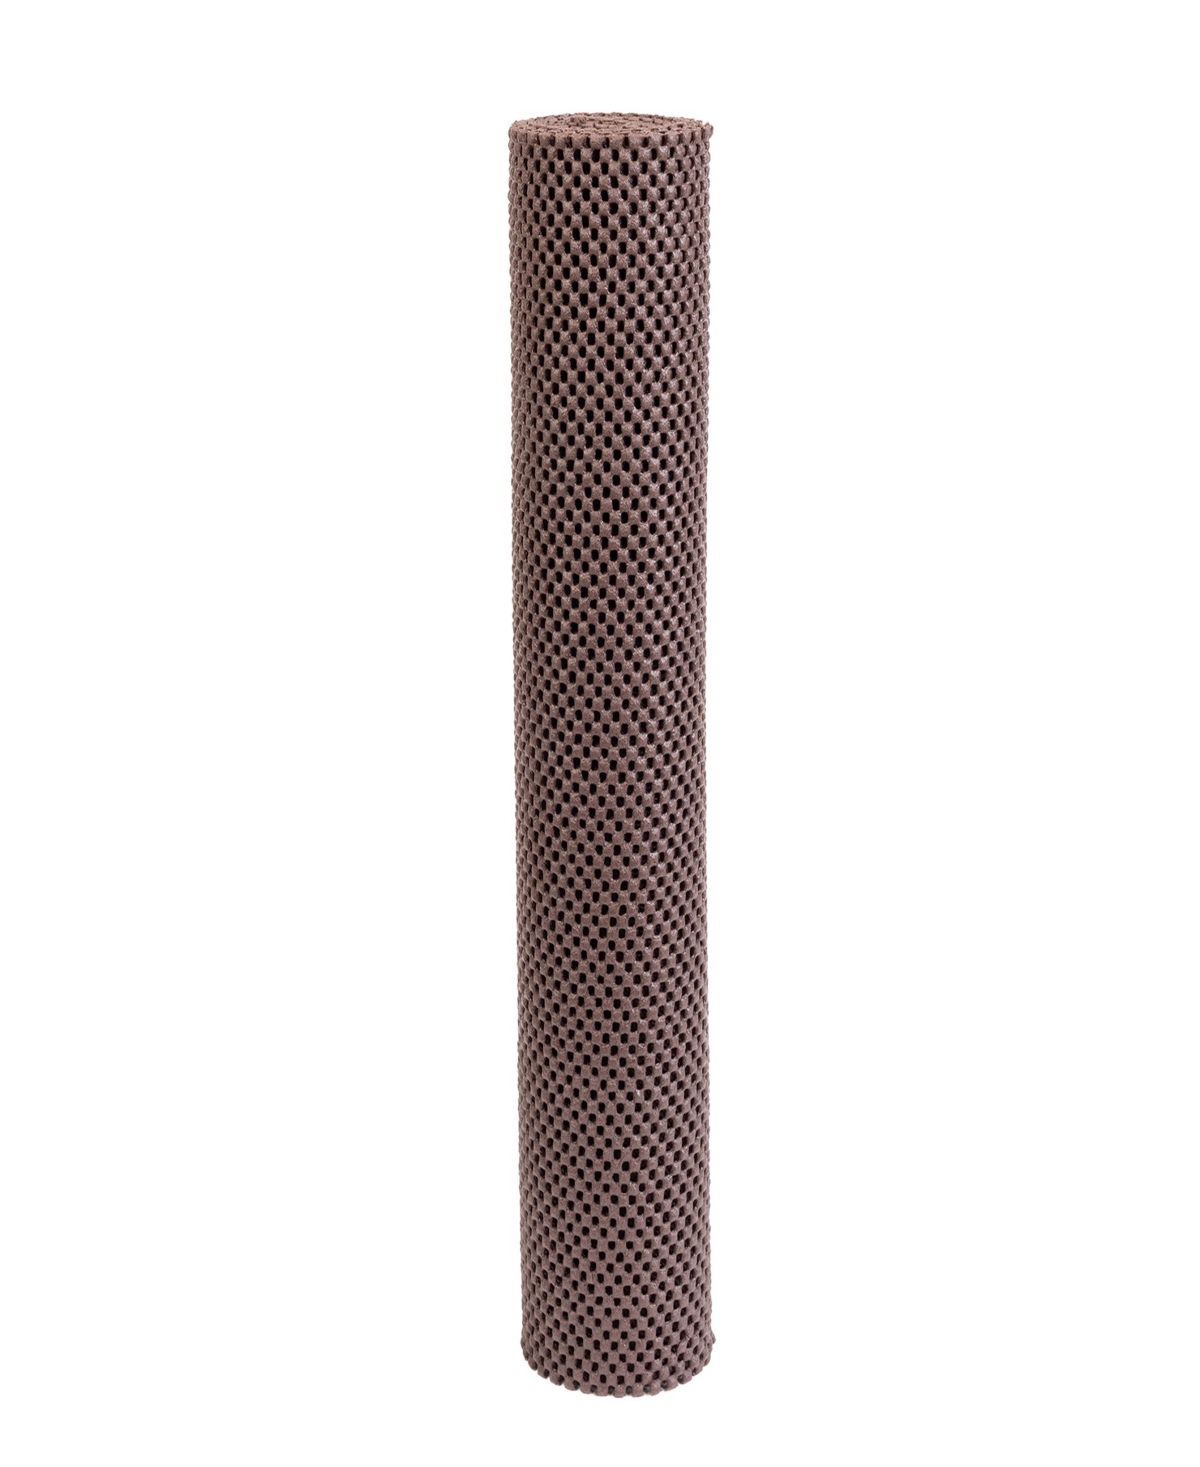 Premium Grip Shelf Liner, 18" x 8' Roll - Coffee Bean